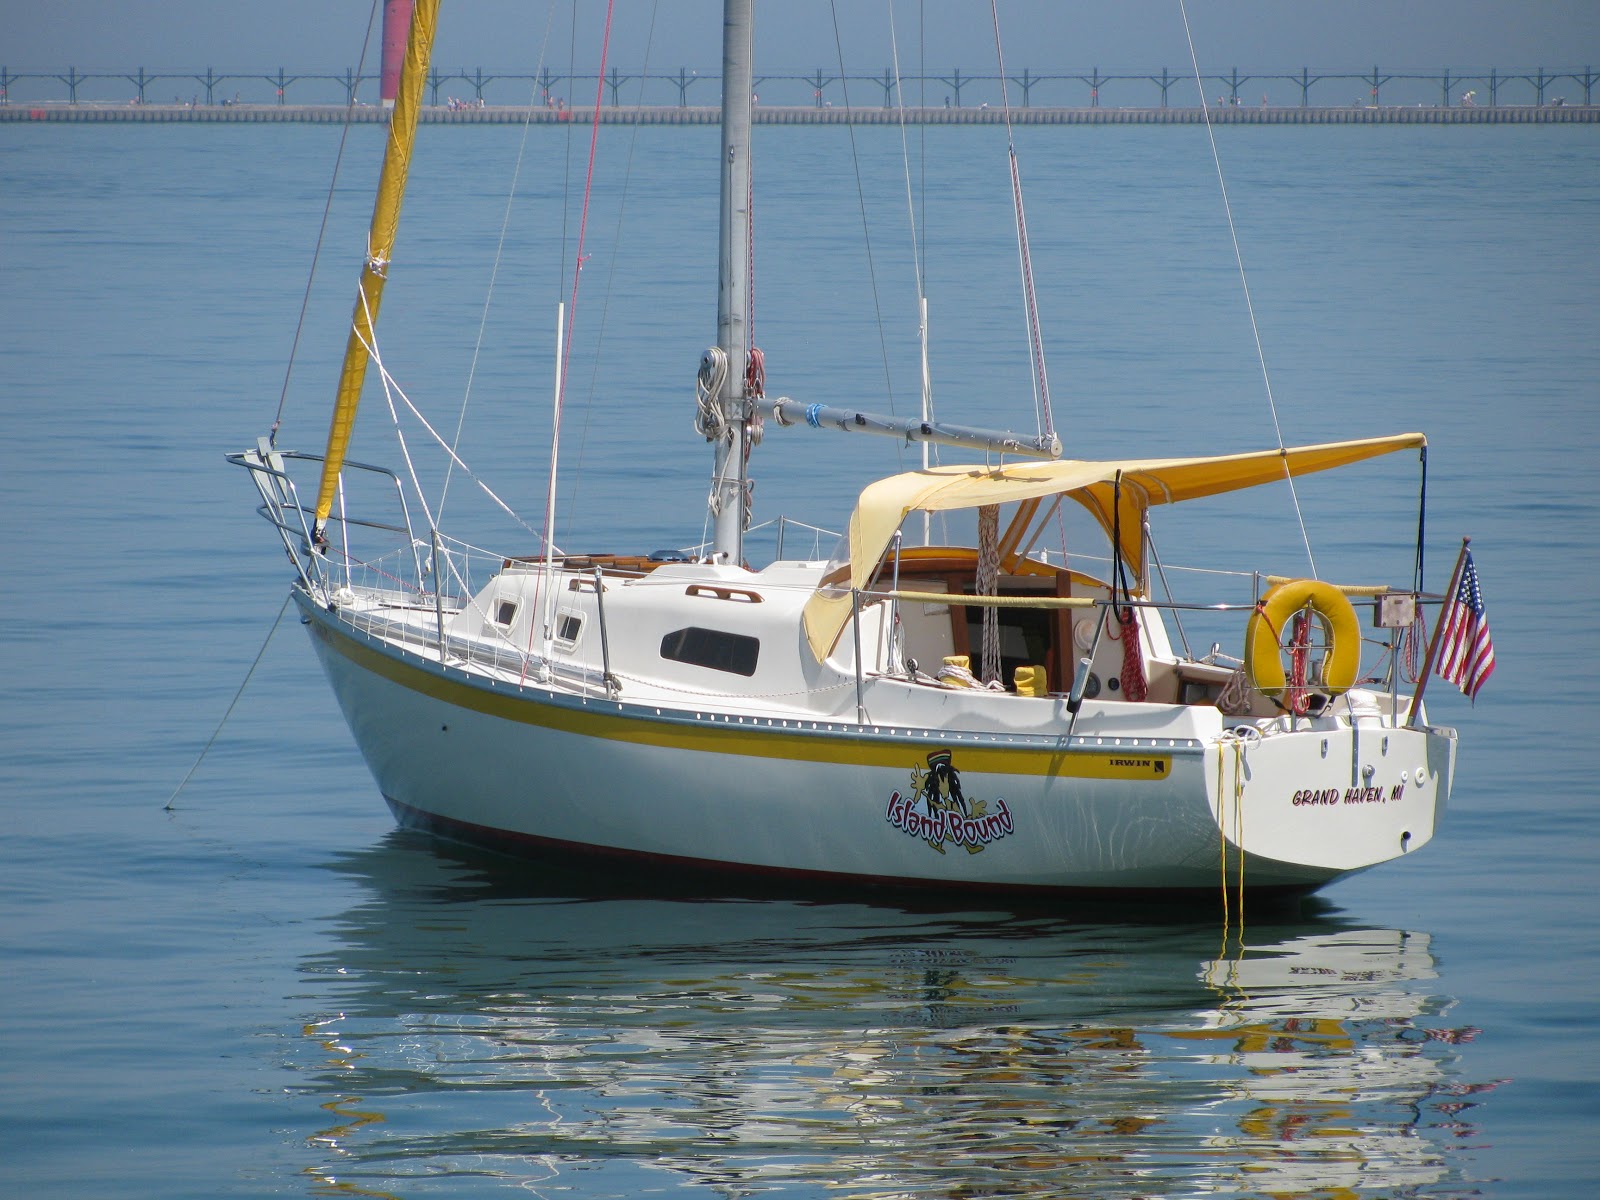 jonny salme: Where to get 30 foot sailboat plans